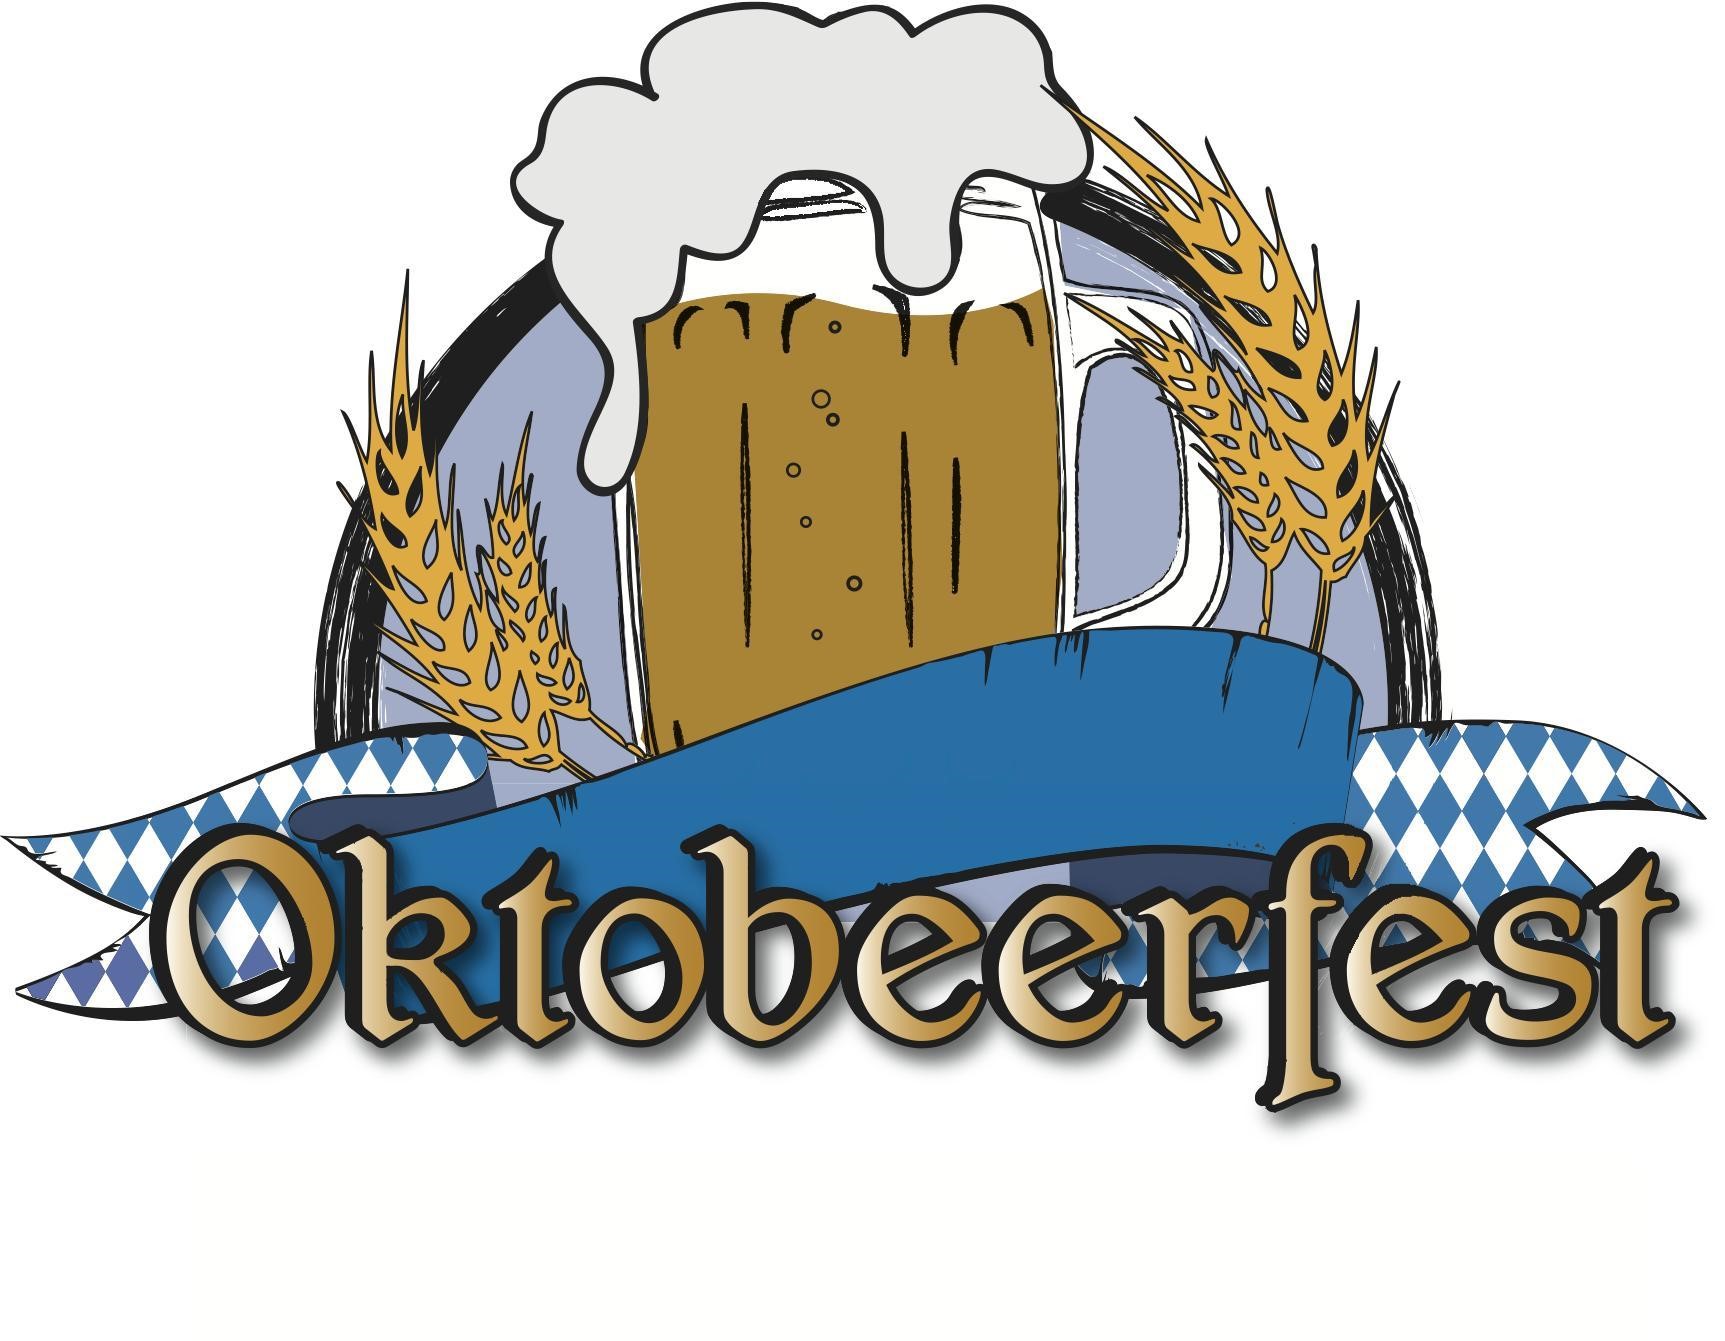 oktobeerfest logo